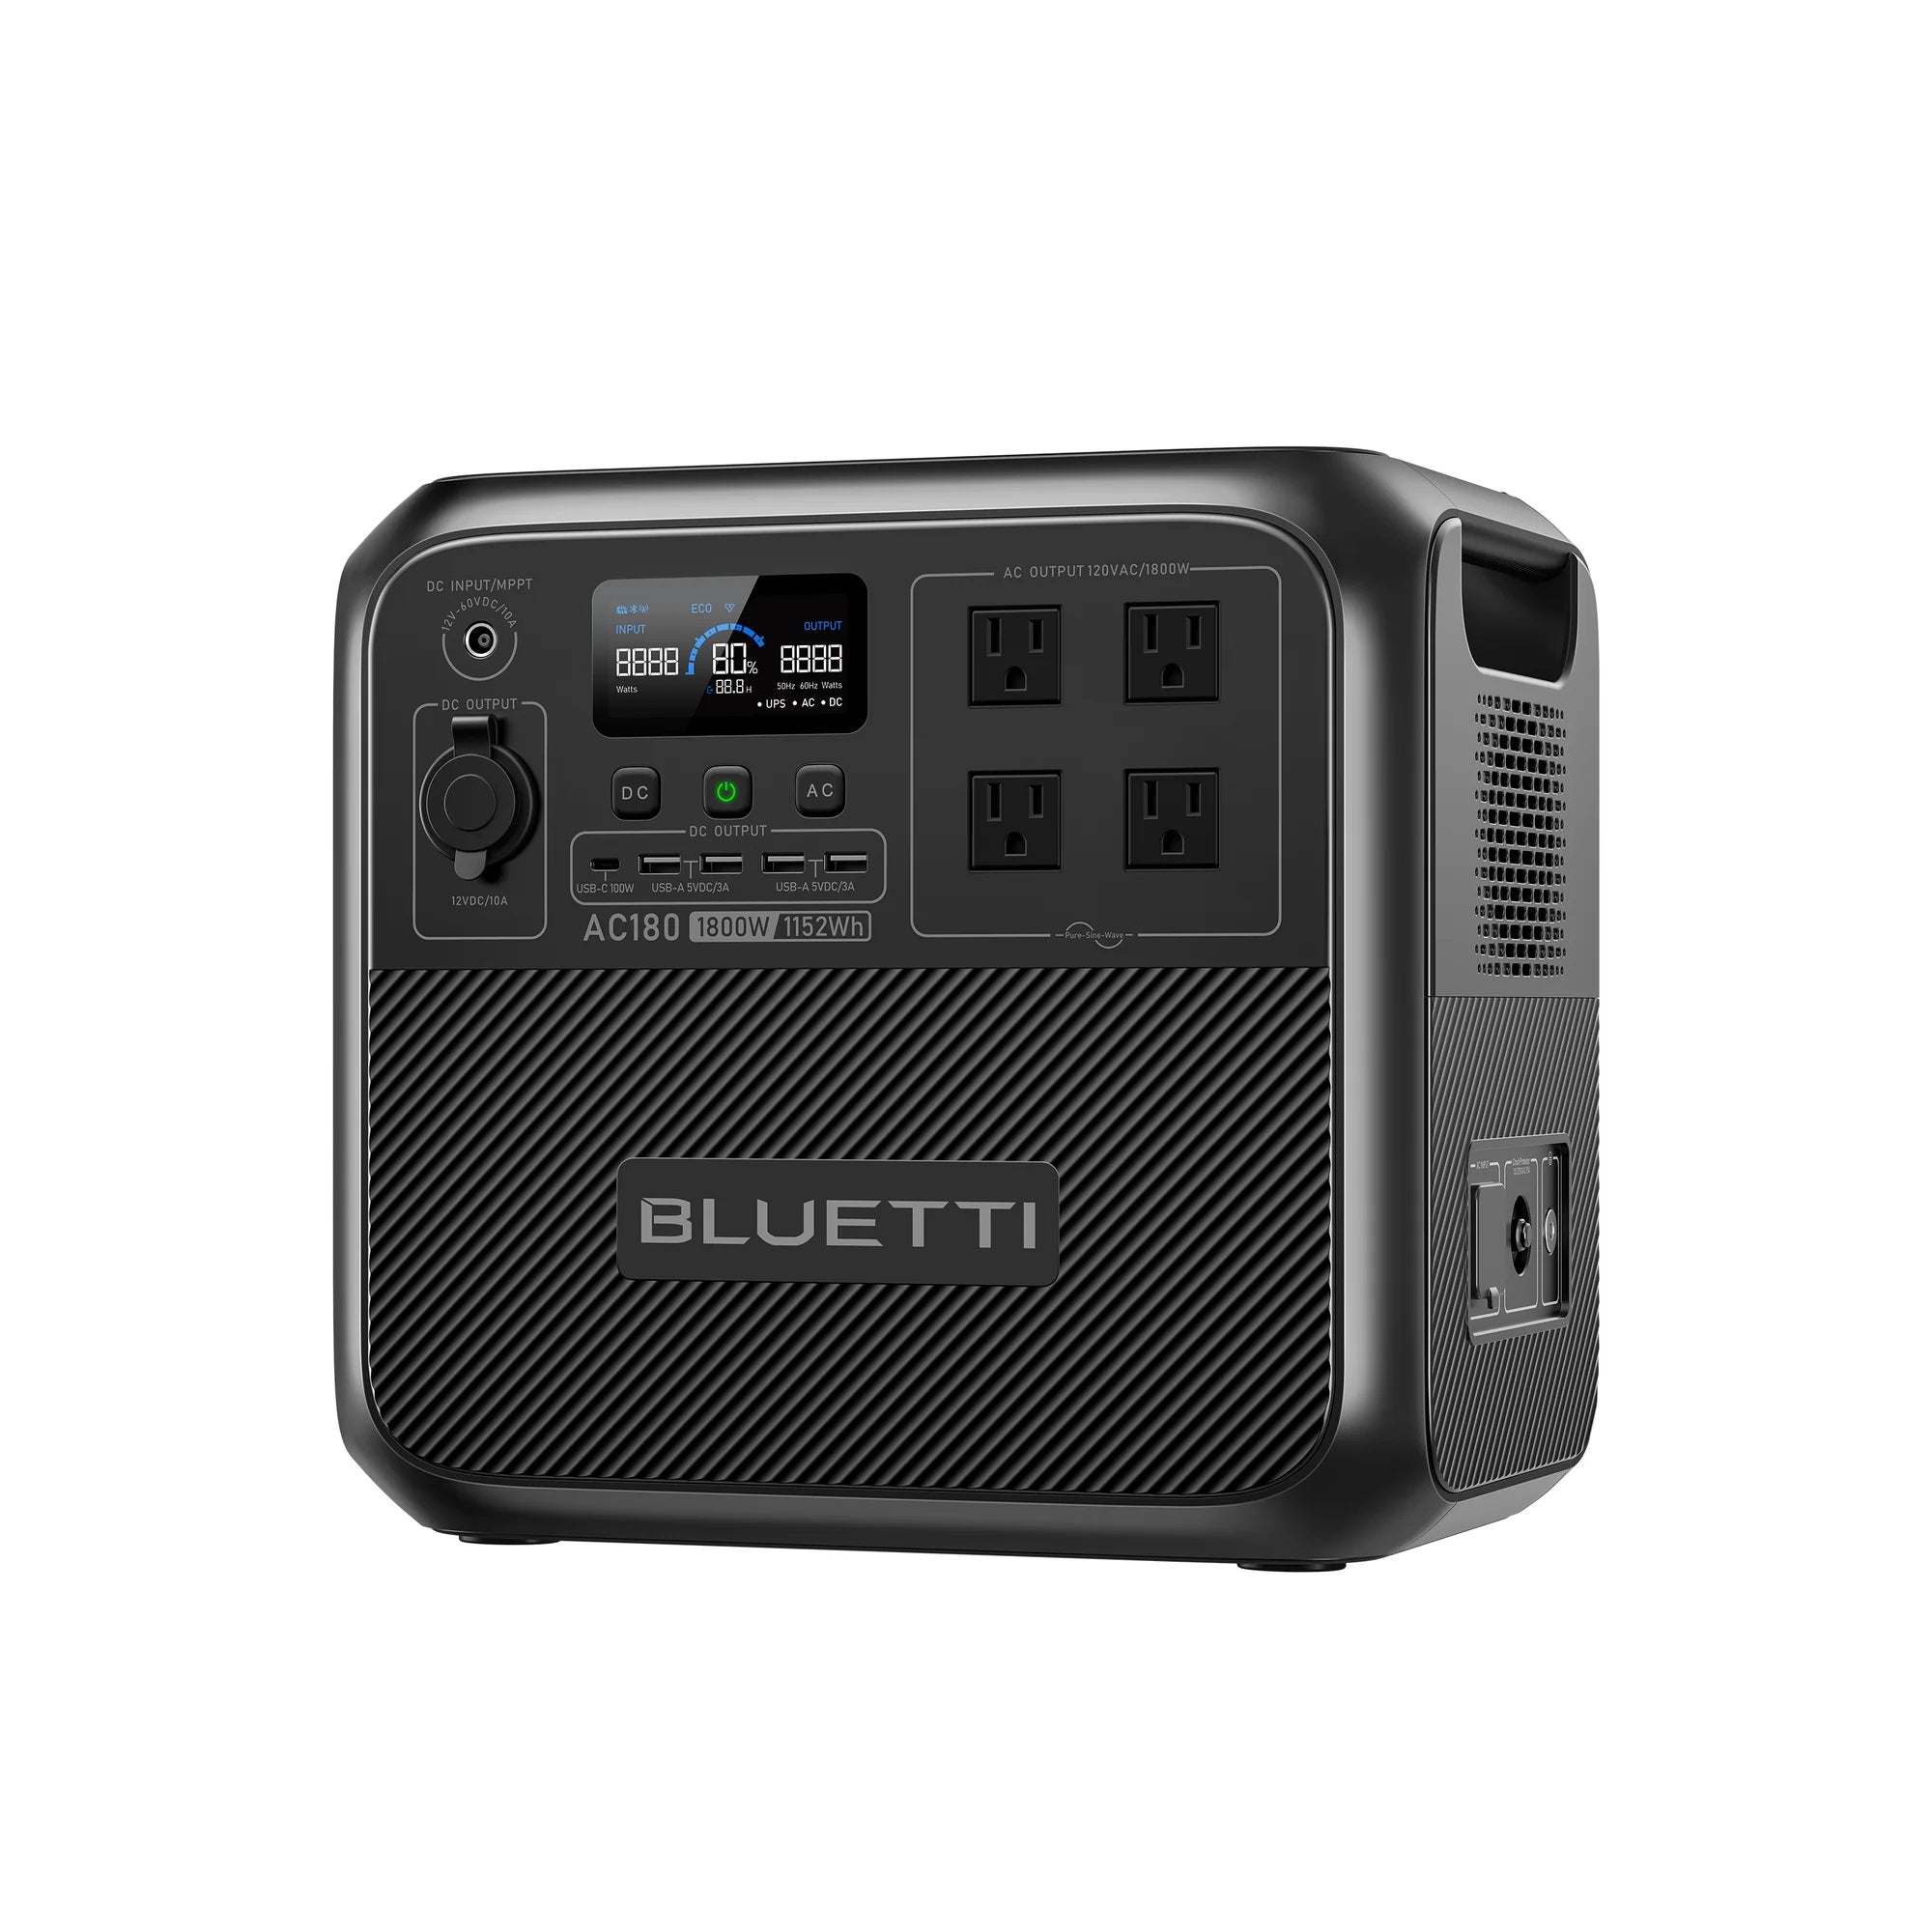 Bluetti Portable Power Station Ac180 1152Wh